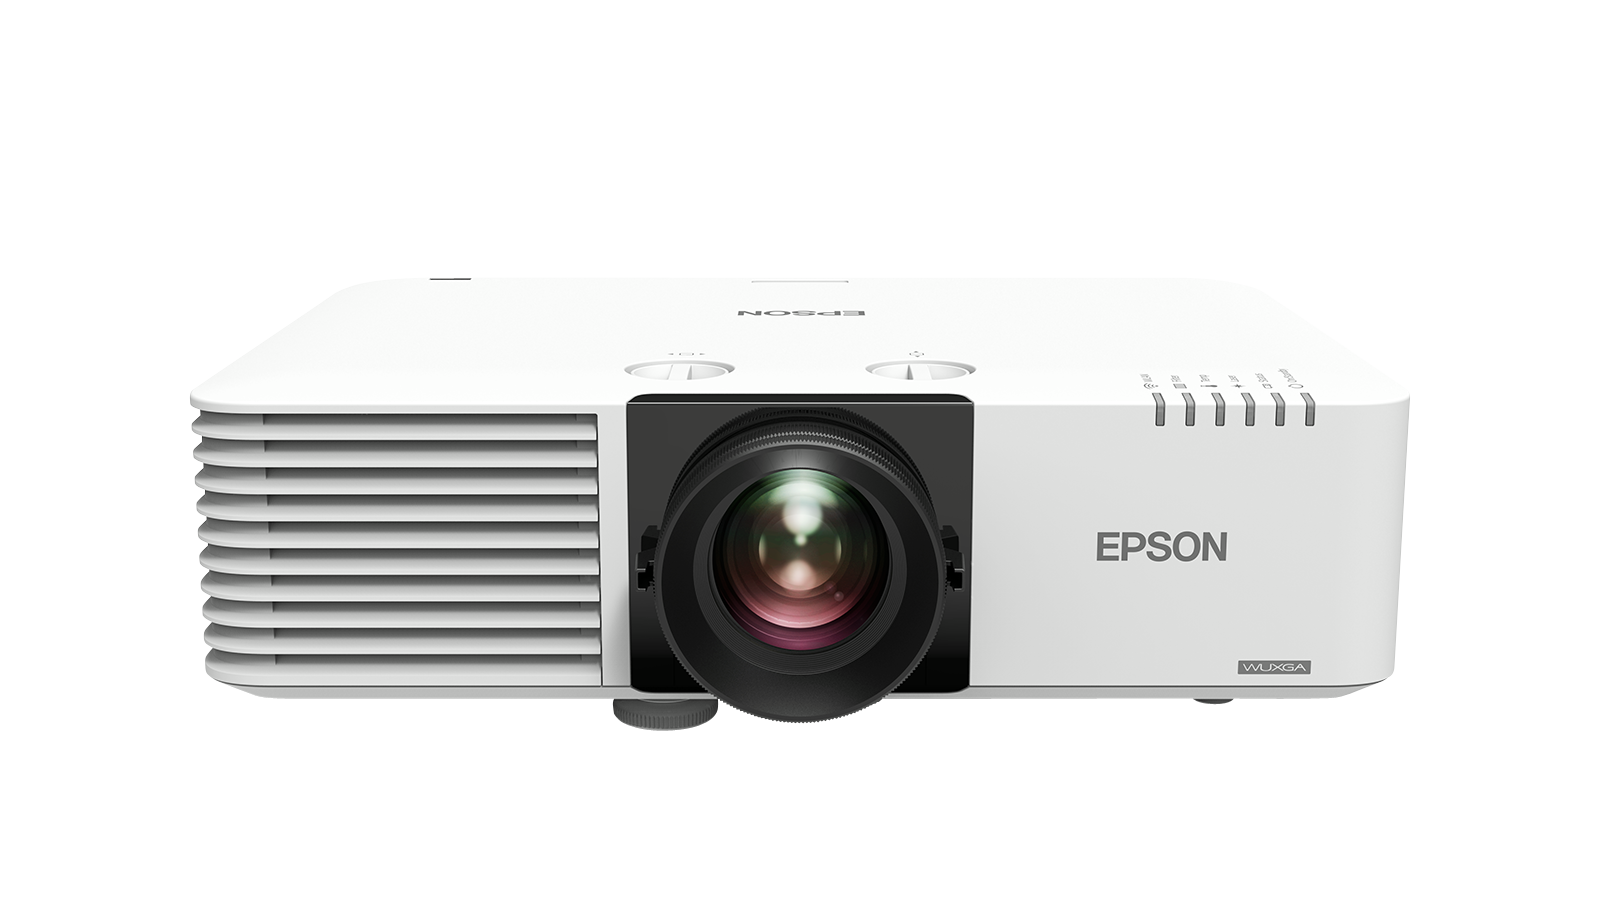 Проєктор Epson EB-L630U White (V11HA26040)